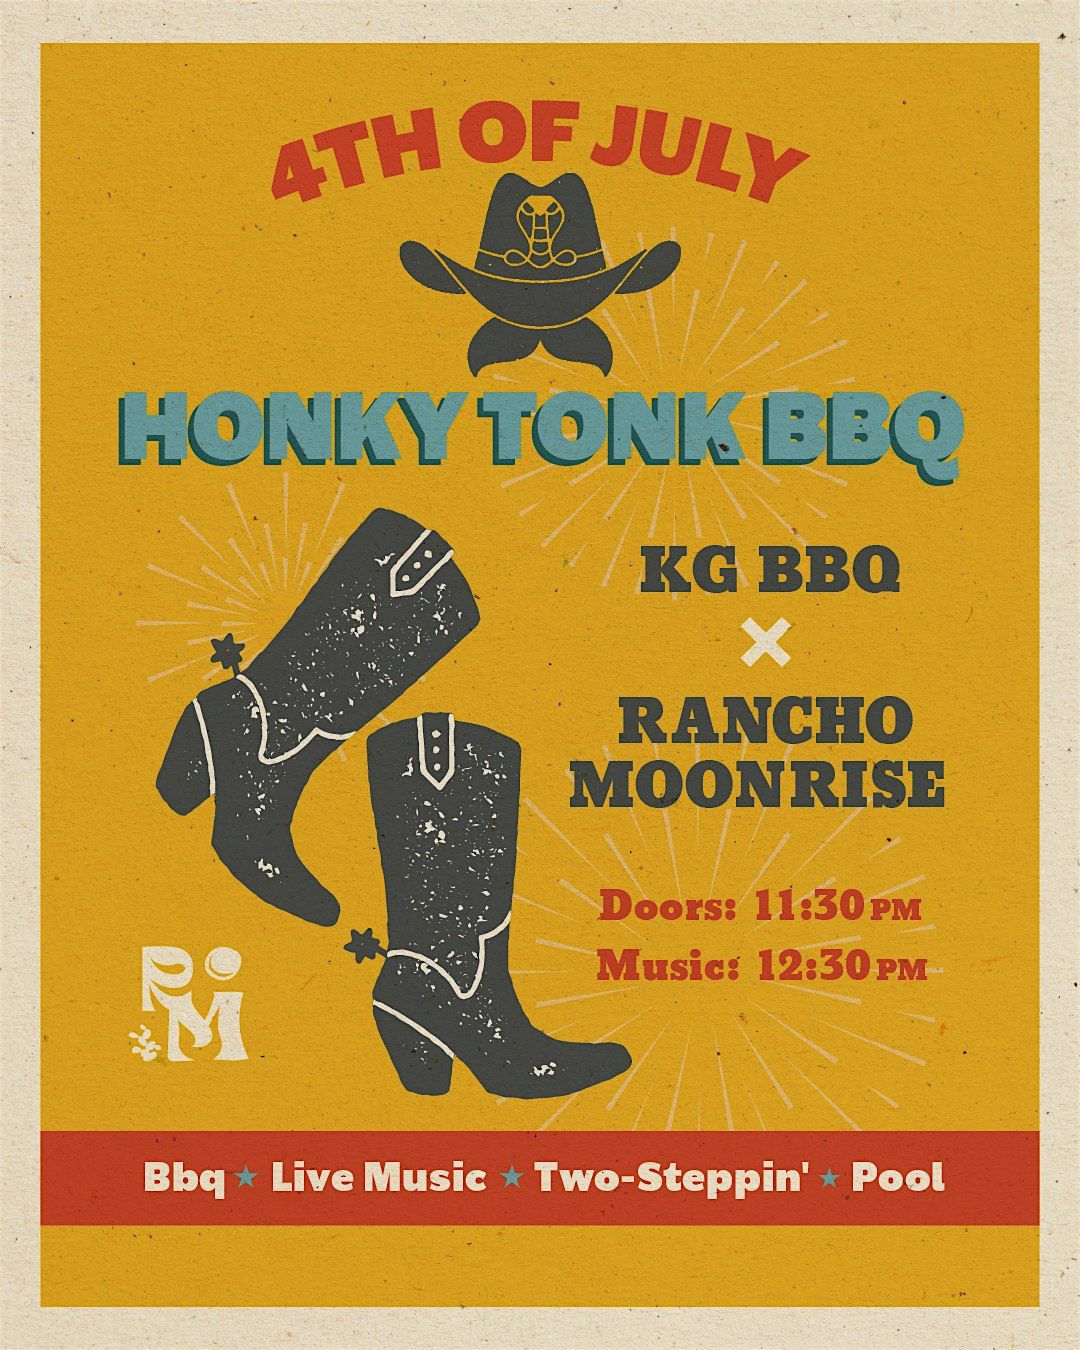 KG BBQ x Rancho Moonrise 4th of July Honky Tonk Festival